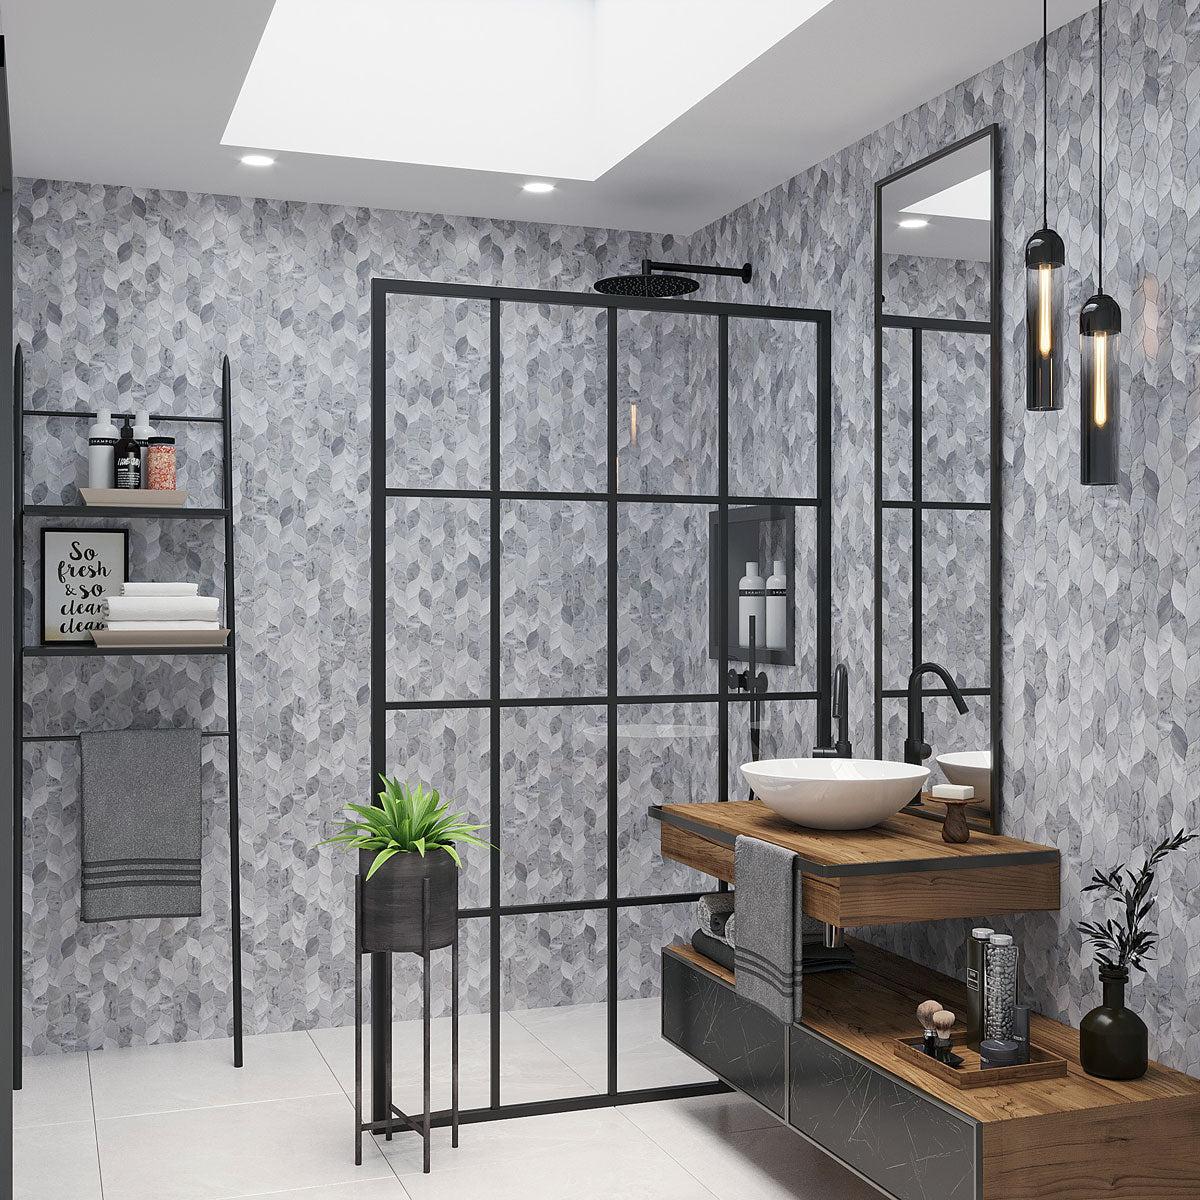 Modern Bathroom with Tiled Vanity Backsplash and Shower Walls in White Carrara Leaves mosaic tiles